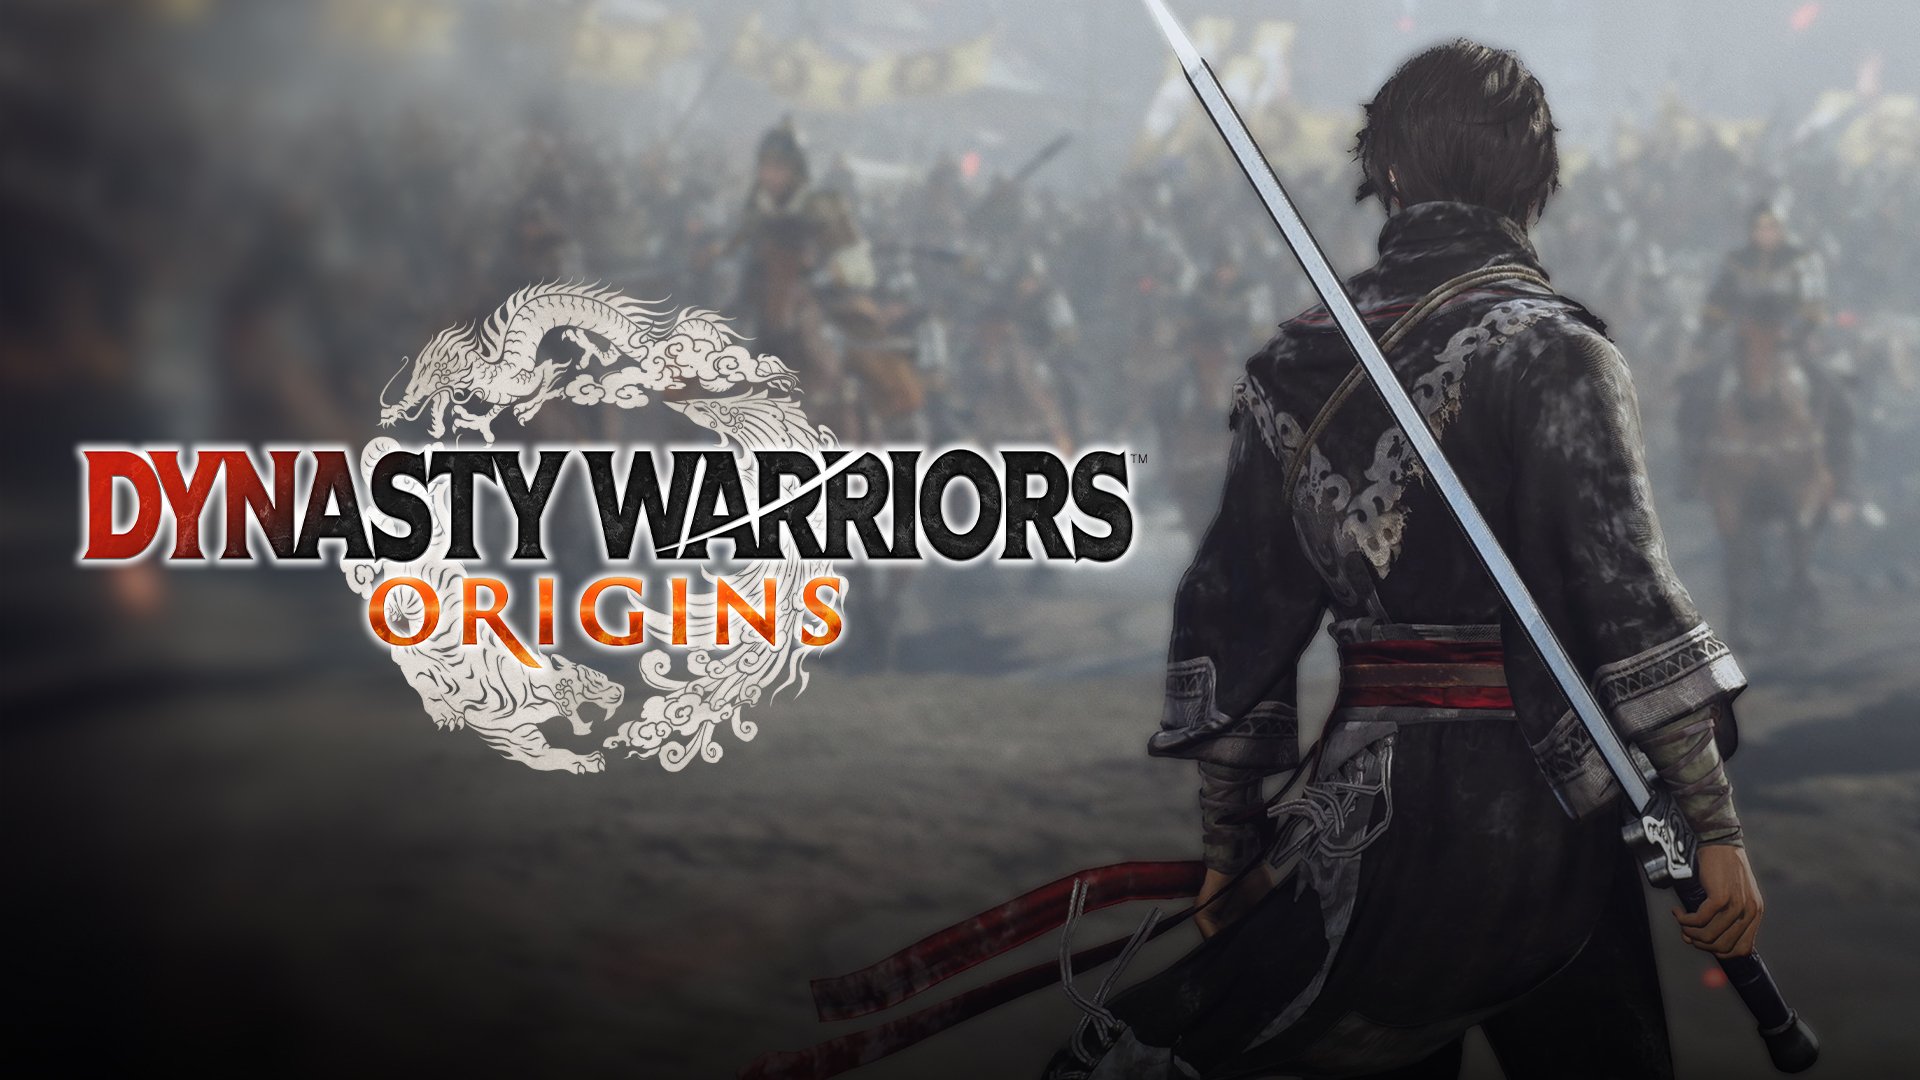 Dynasty warriors origins key art 2 1